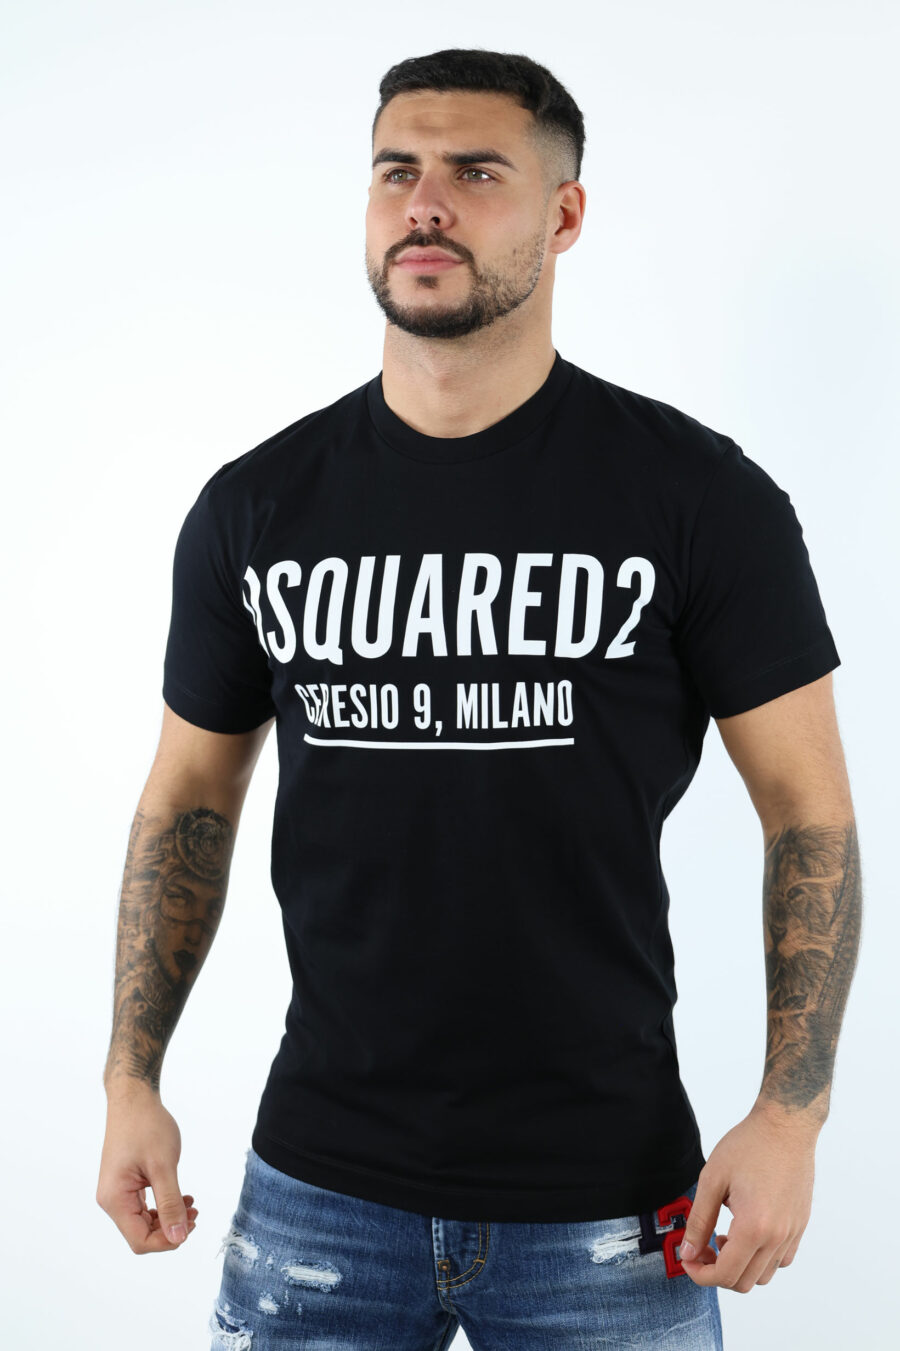 Black T-shirt with maxilogo "ceresio 9 milano" - 106862